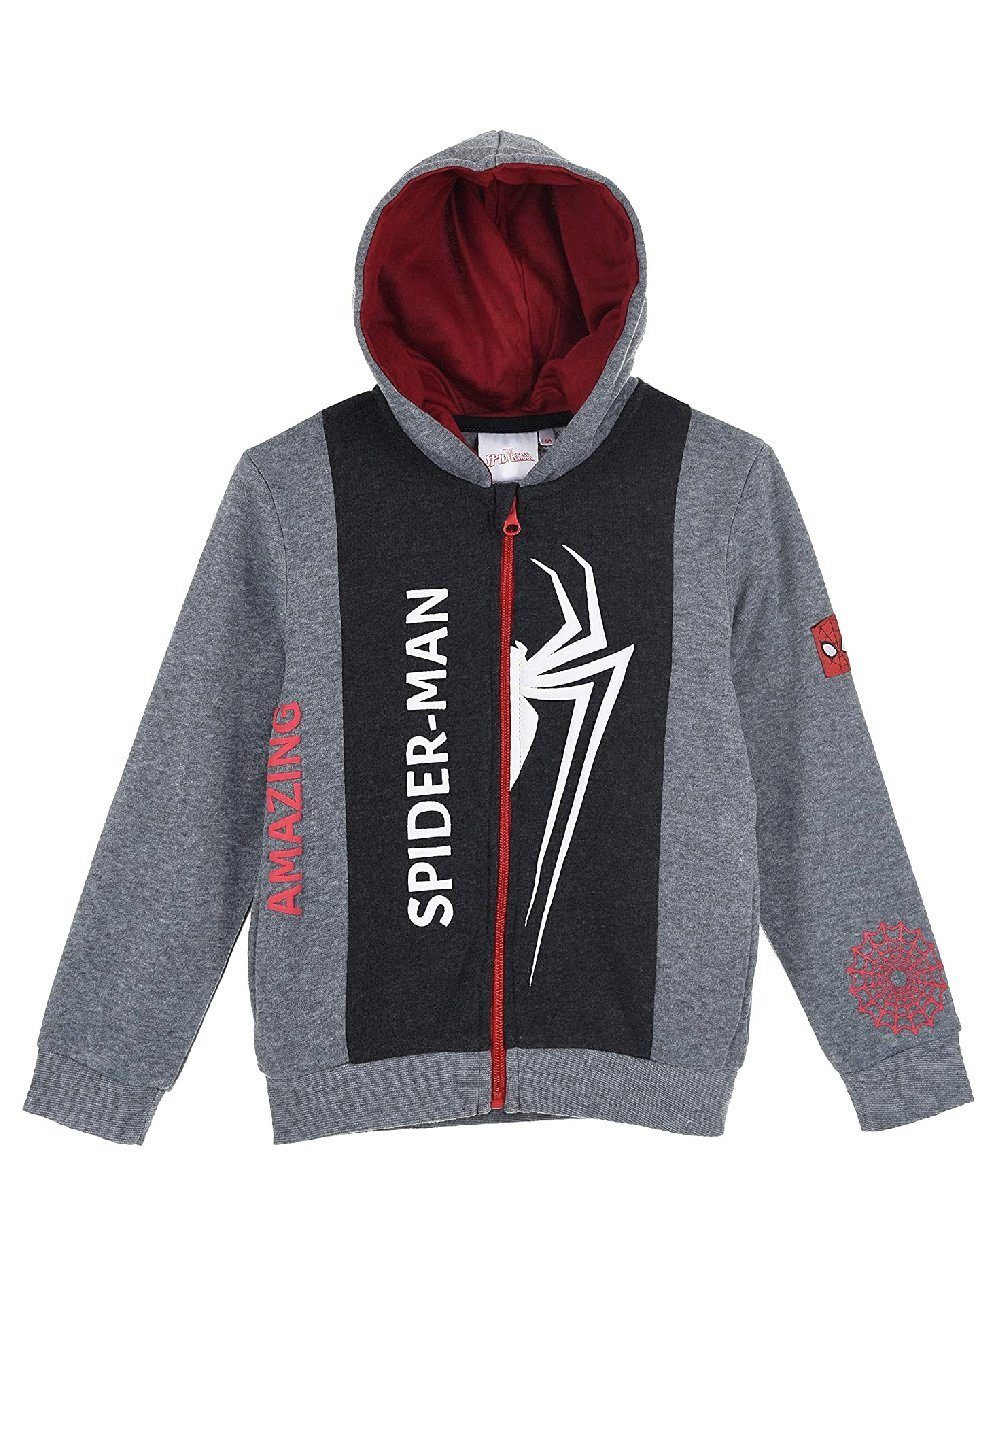 Venom Spiderman Kinder Hoodie Sweatjacke Superheld Sport Sweatshirt Jacke Mantel 